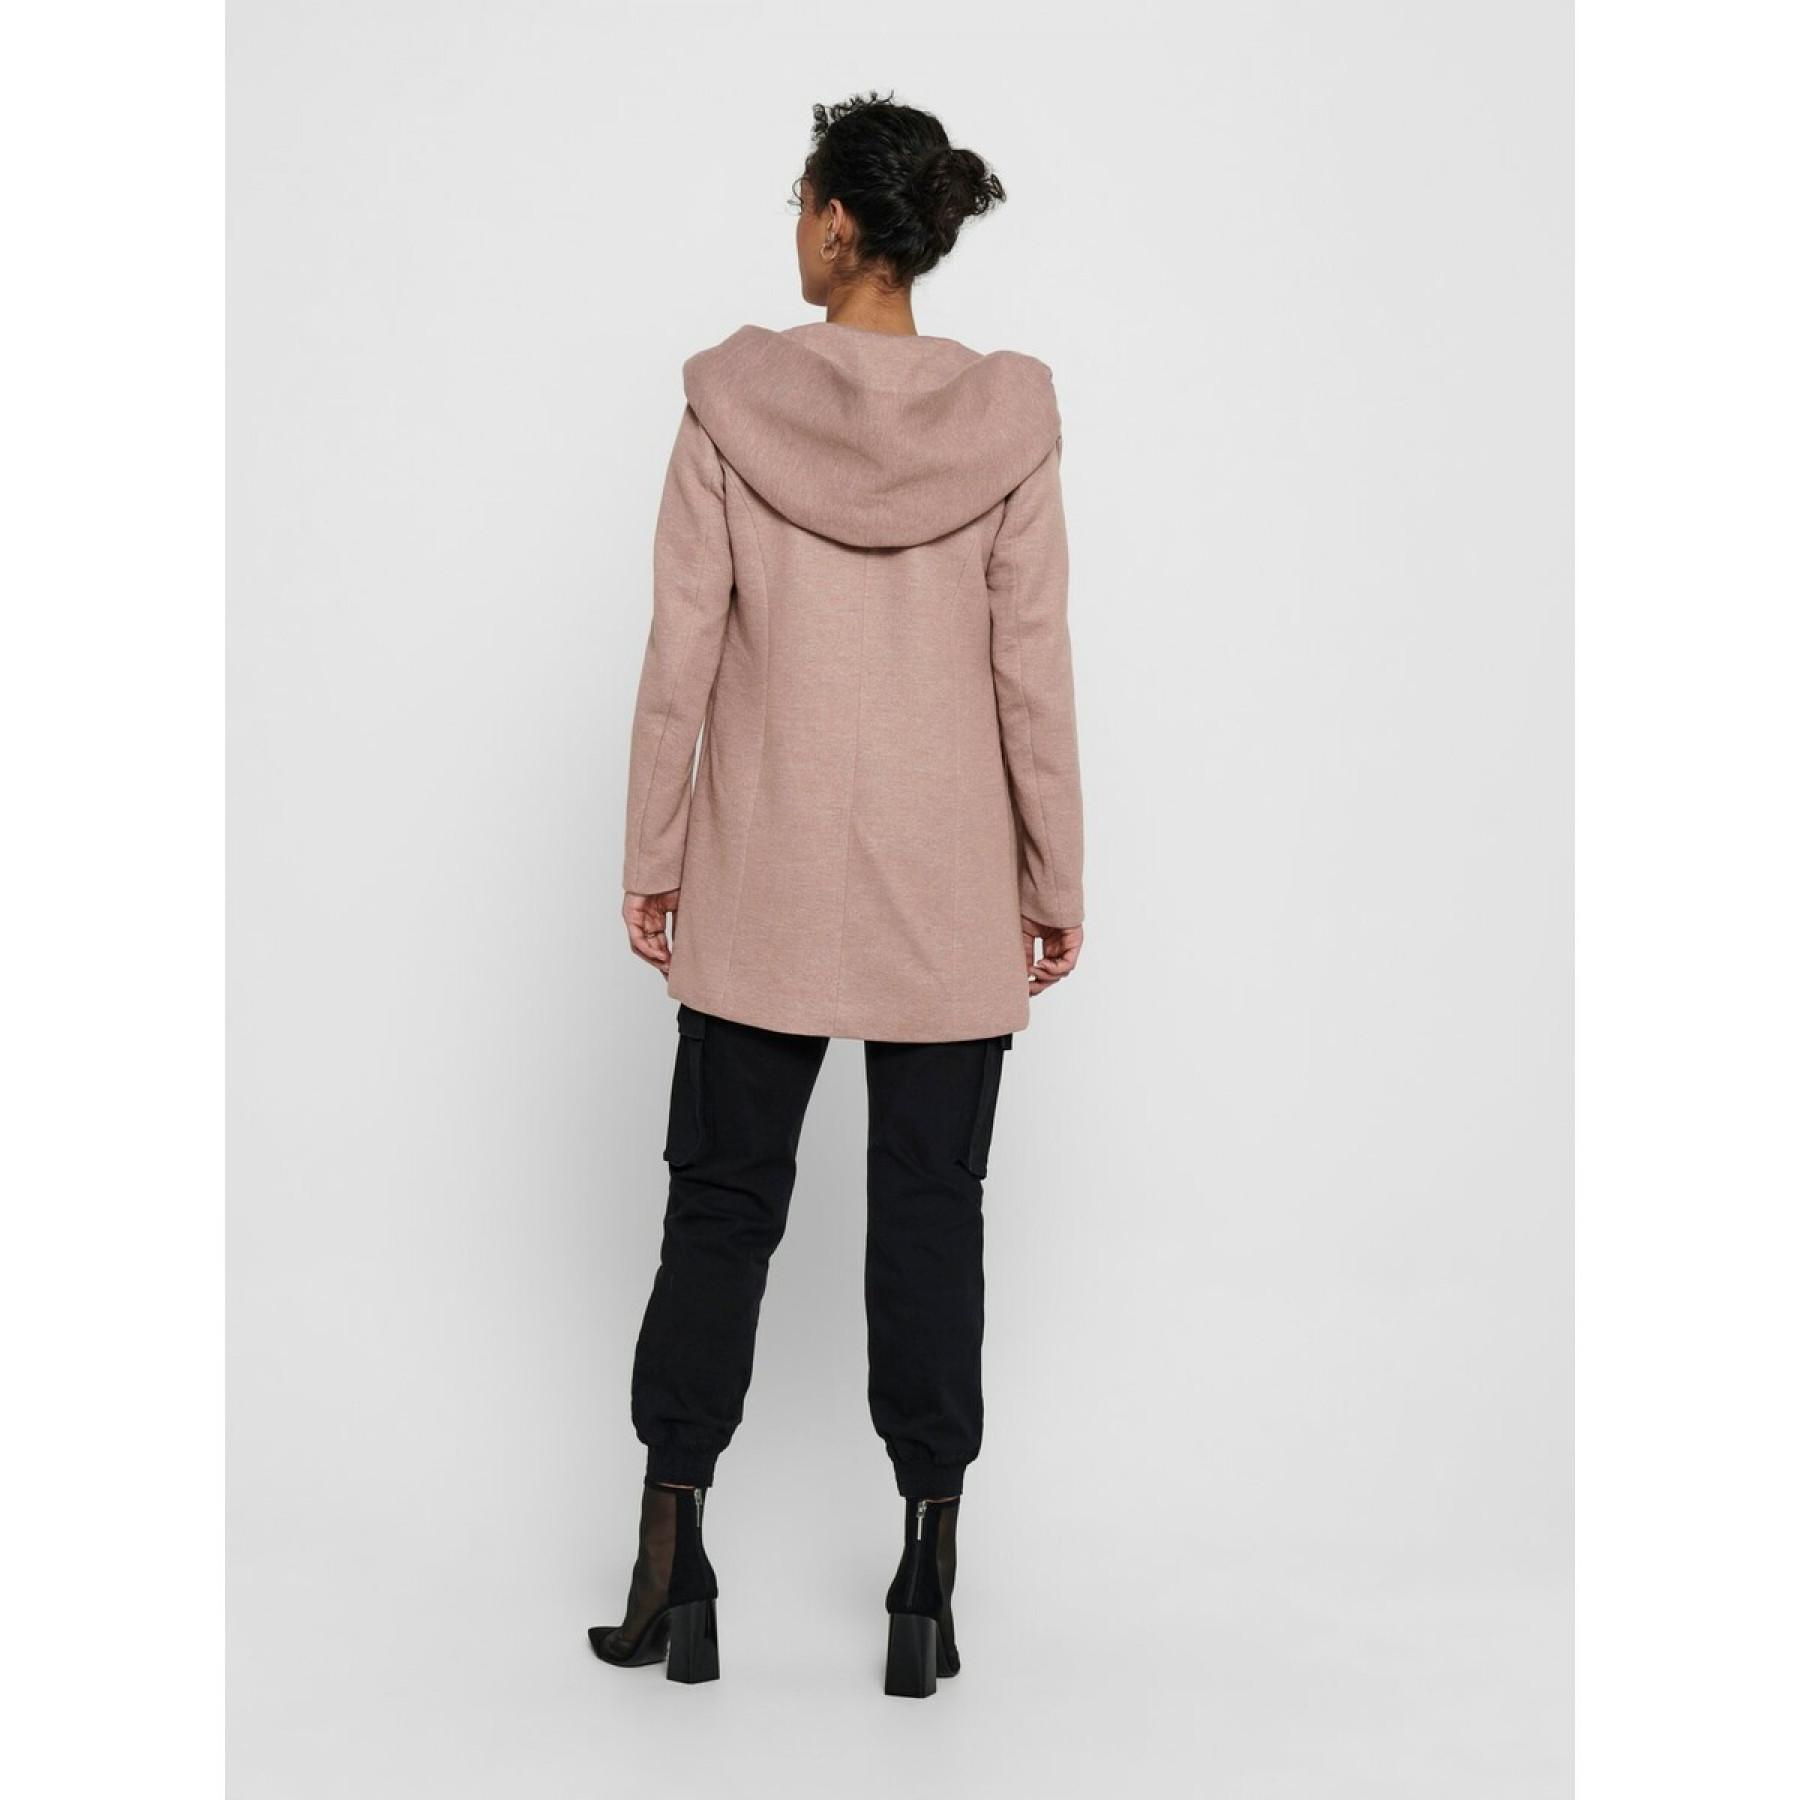 Women's coat Only Sedona light coat